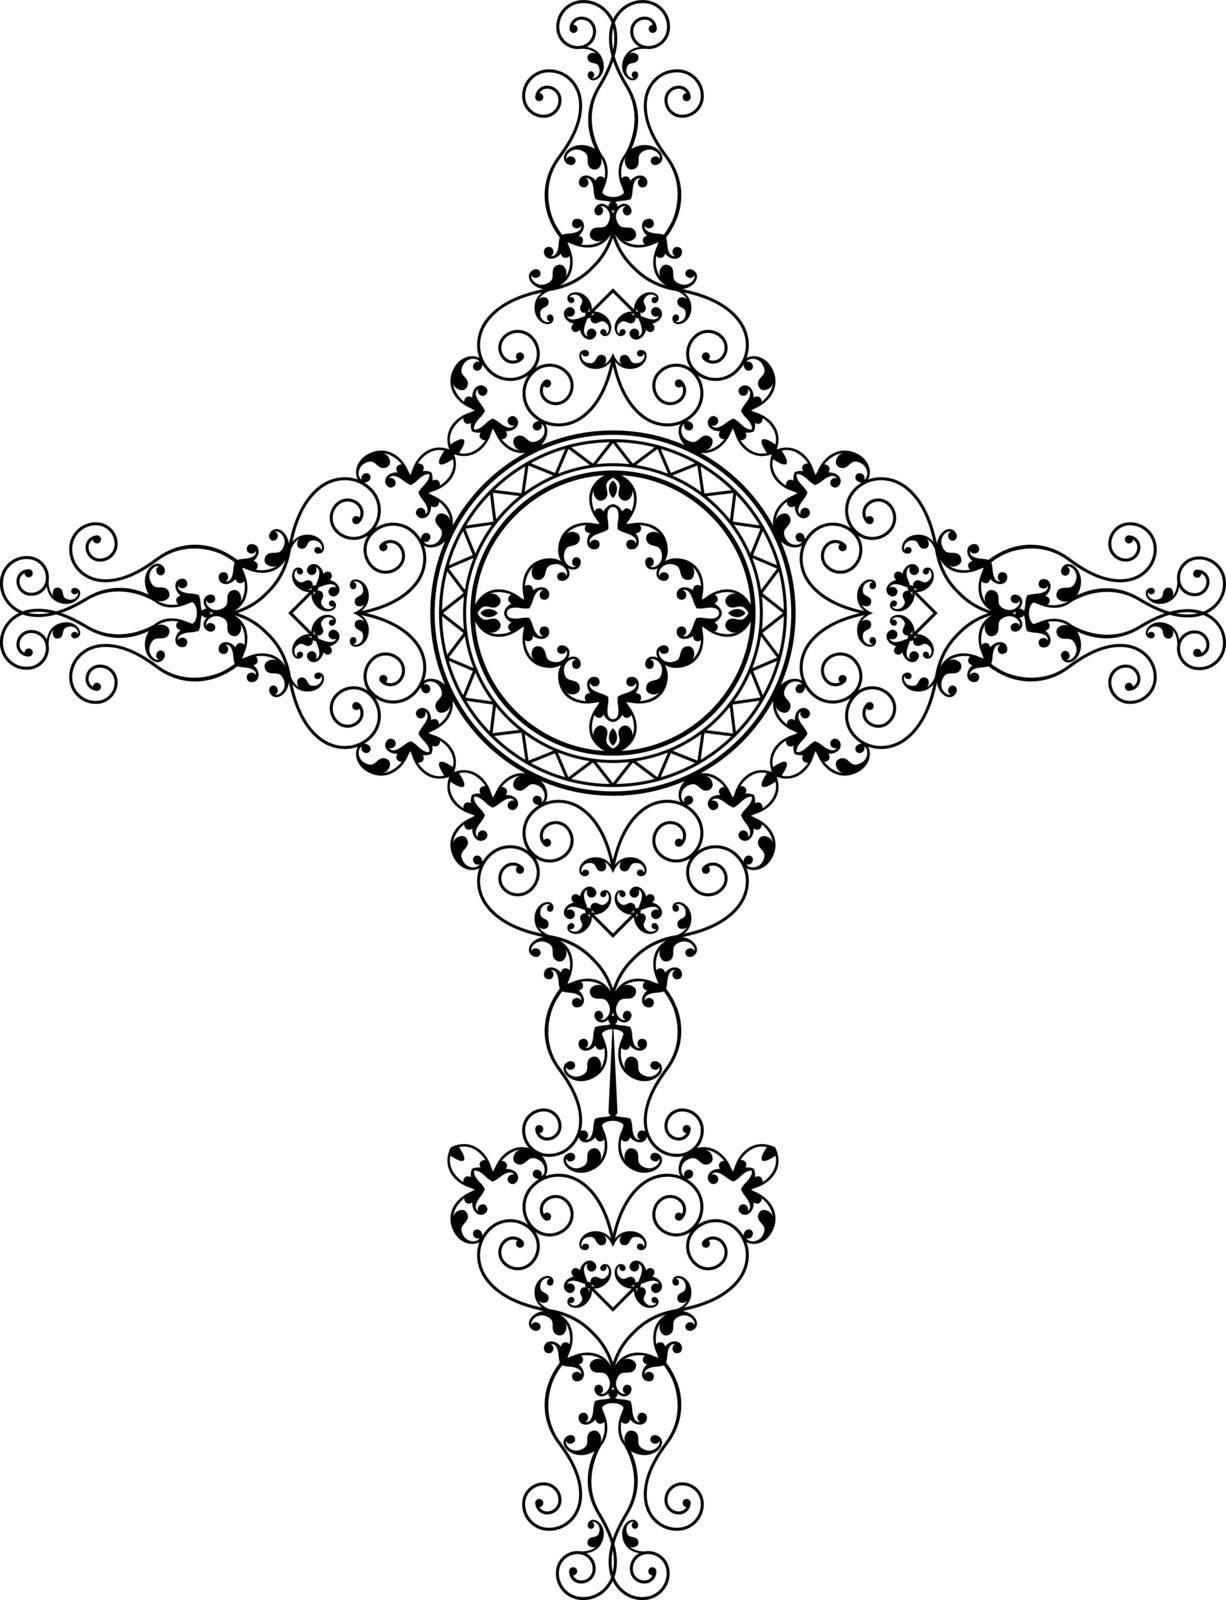 Cross Christian Design by AjayShri